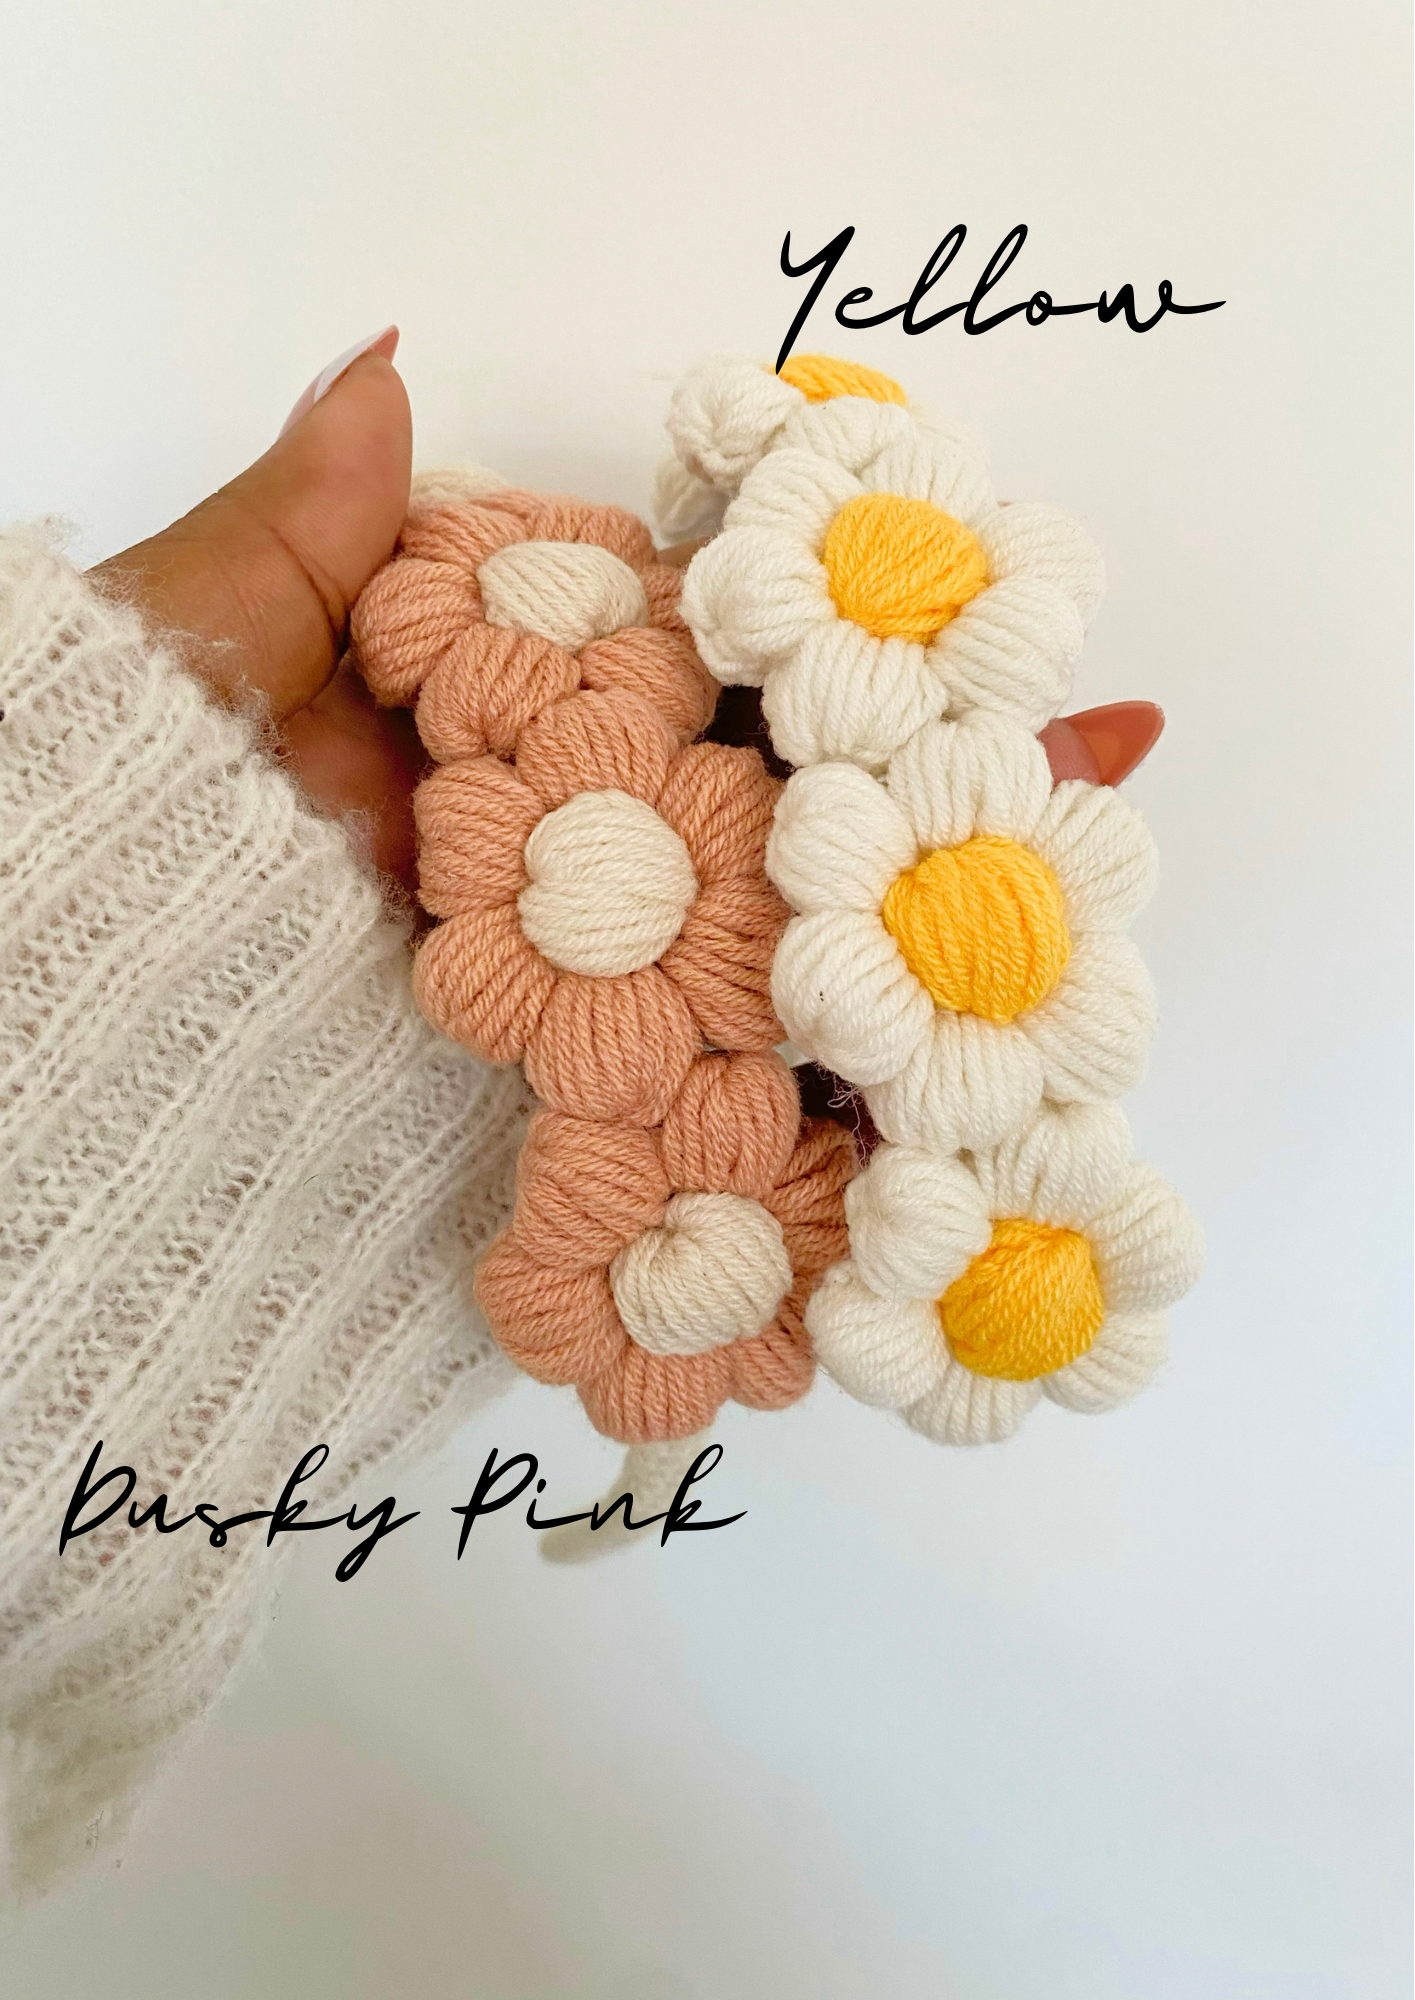 Crochet sunflower headband